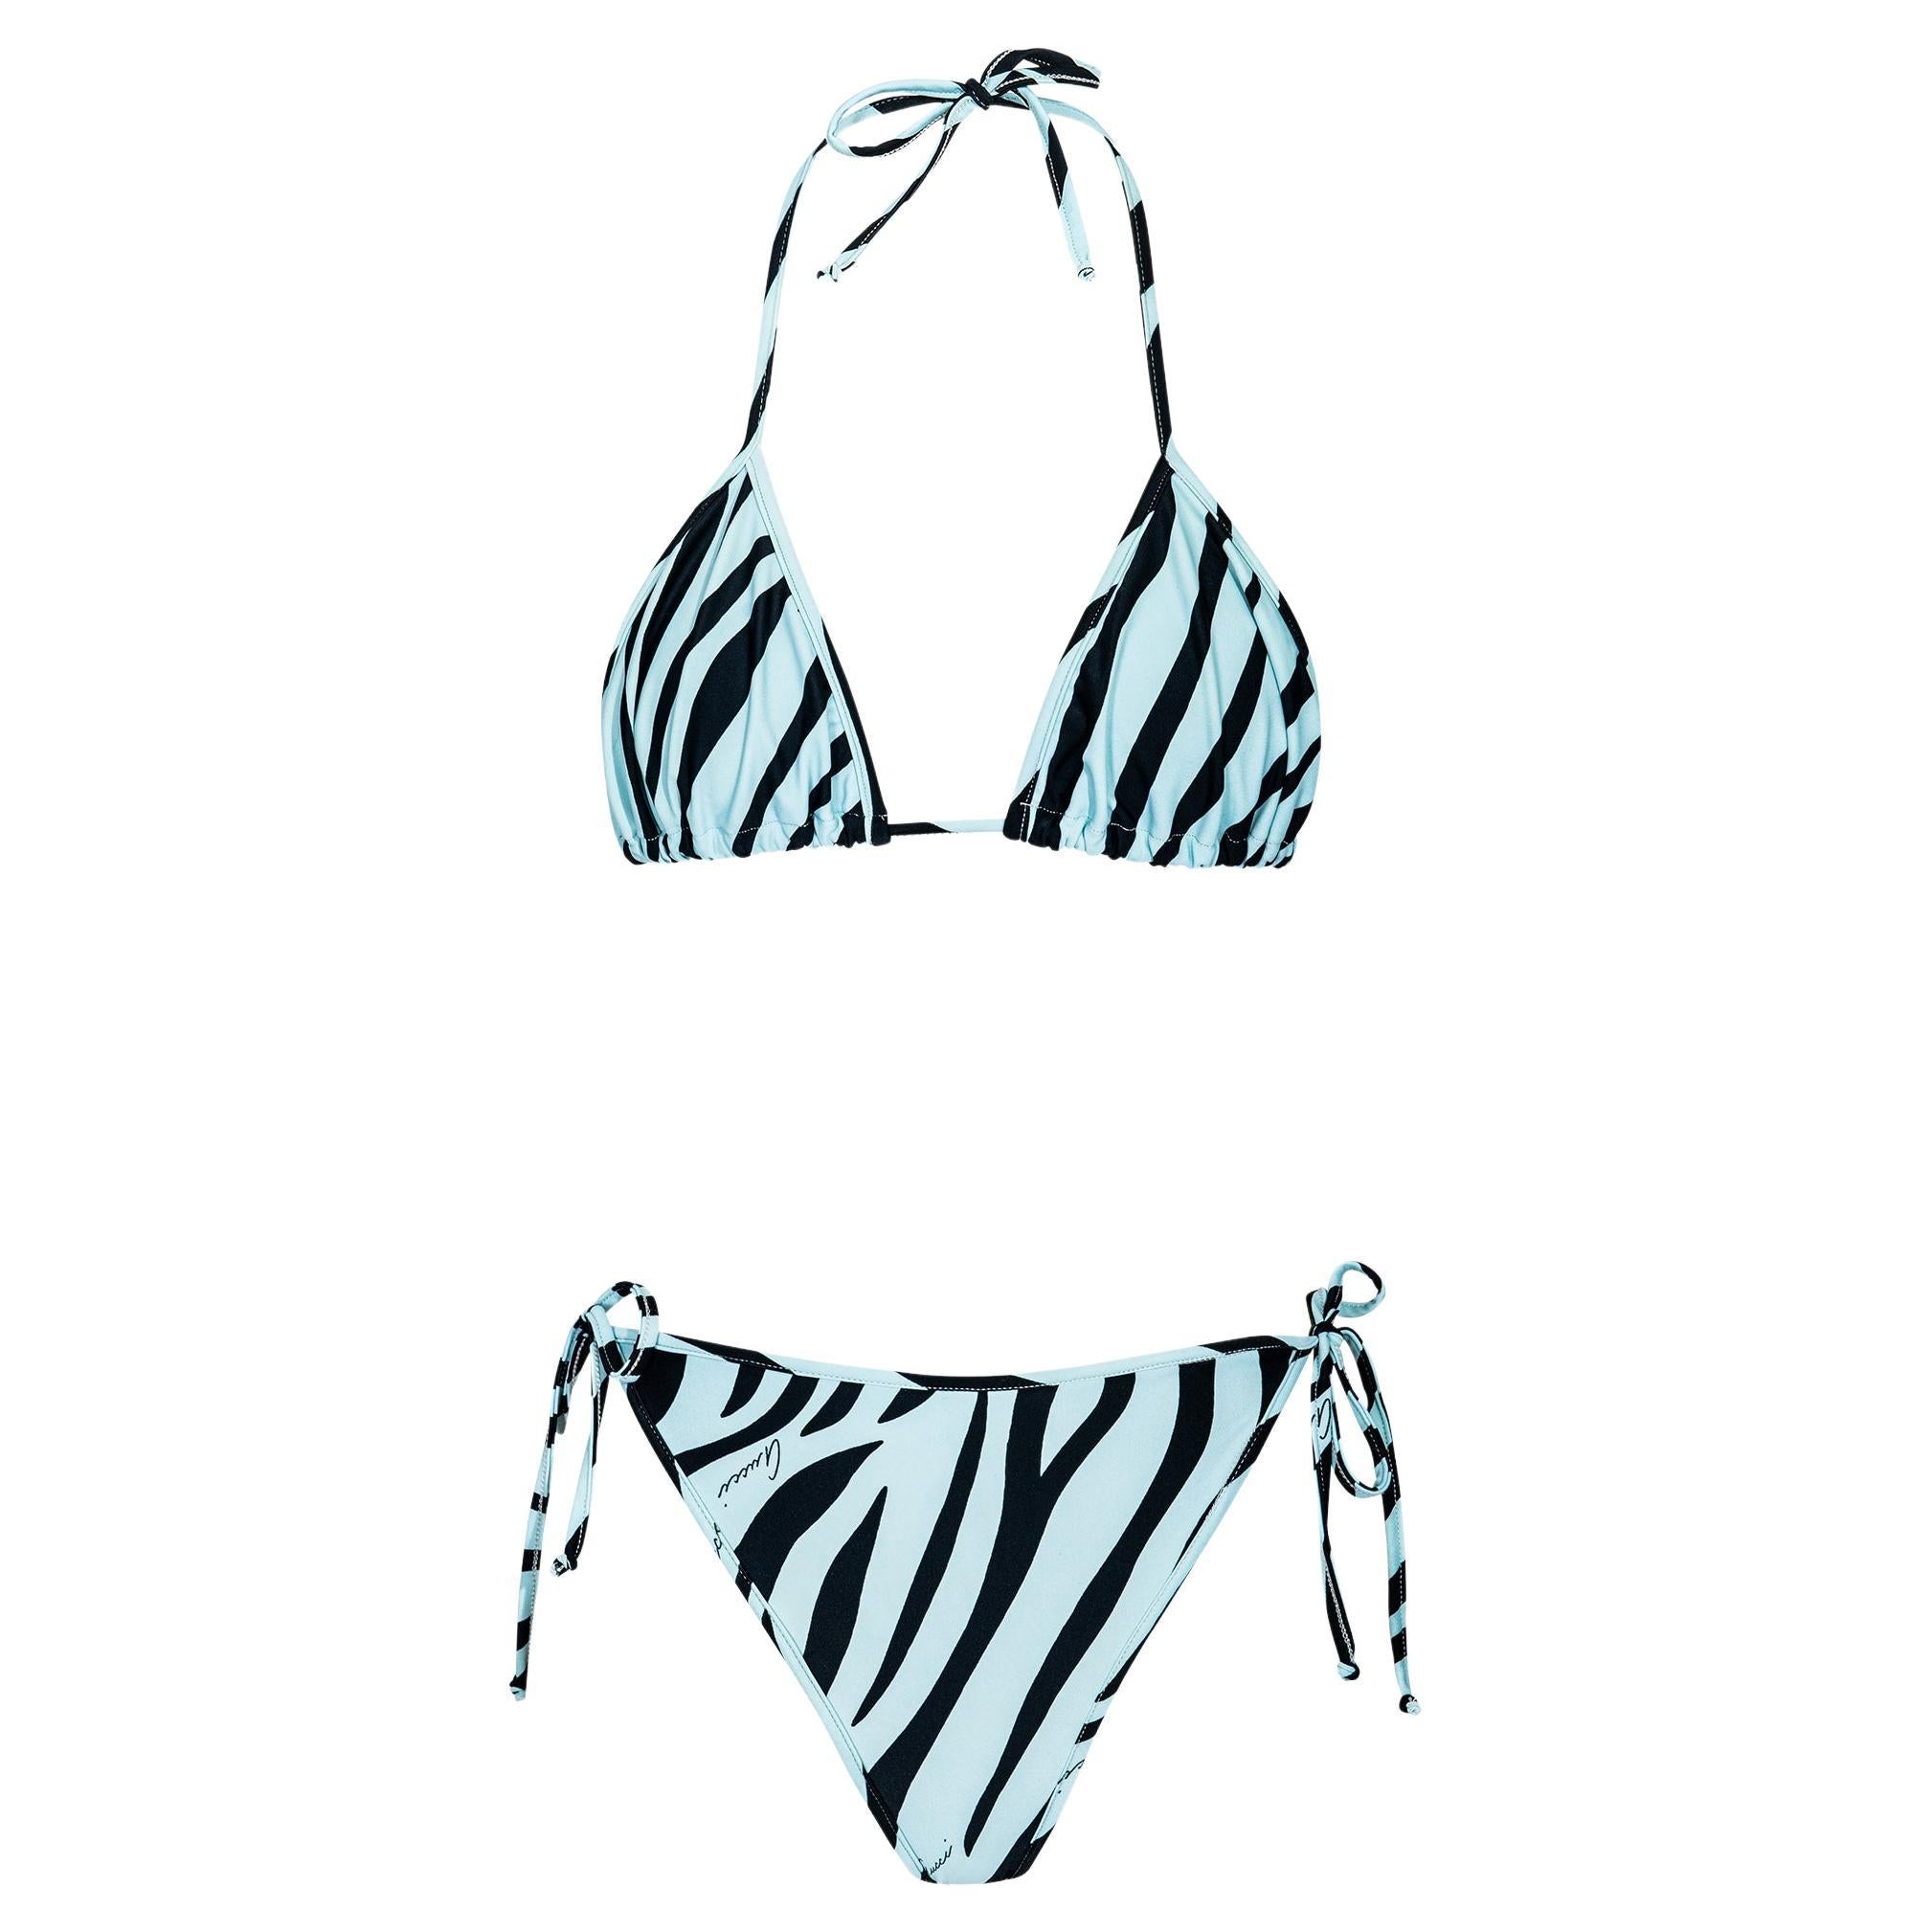 S/S 1996 Gucci by Tom Ford Blue and Black Zebra Print String Bikini